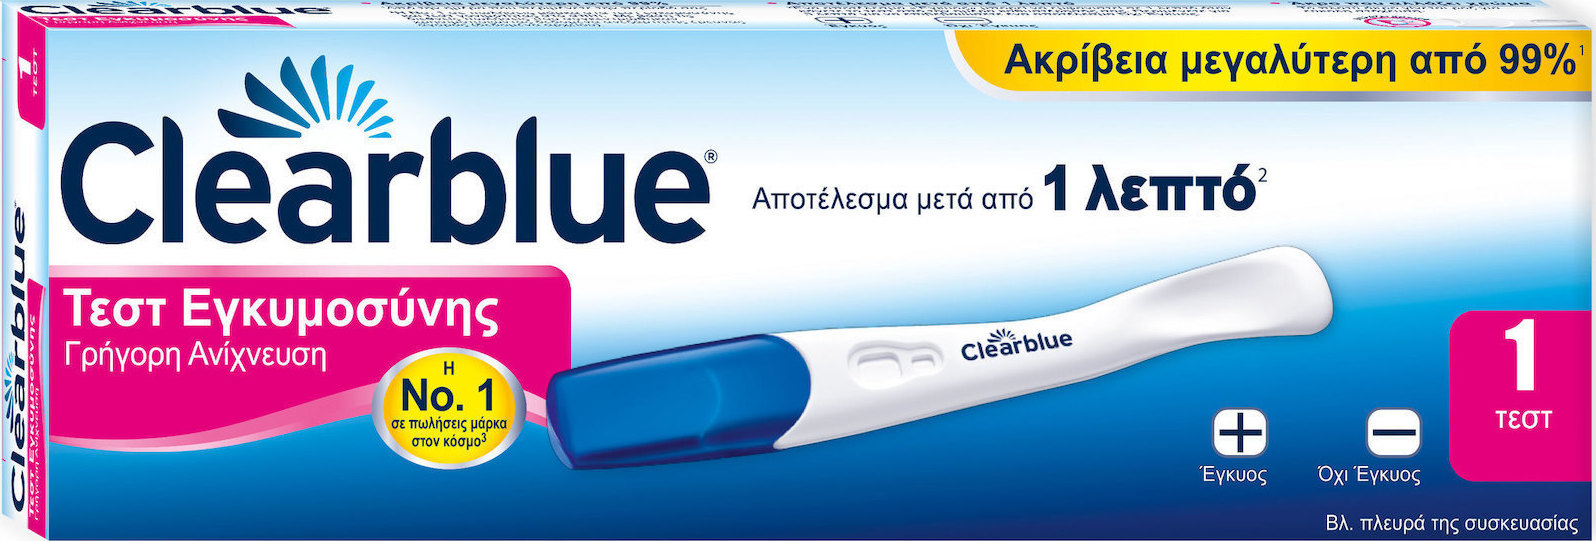 Clearblue τεστ εγκυμοσύνης για γρήγορη ανίχνευση 1τμχ P&G